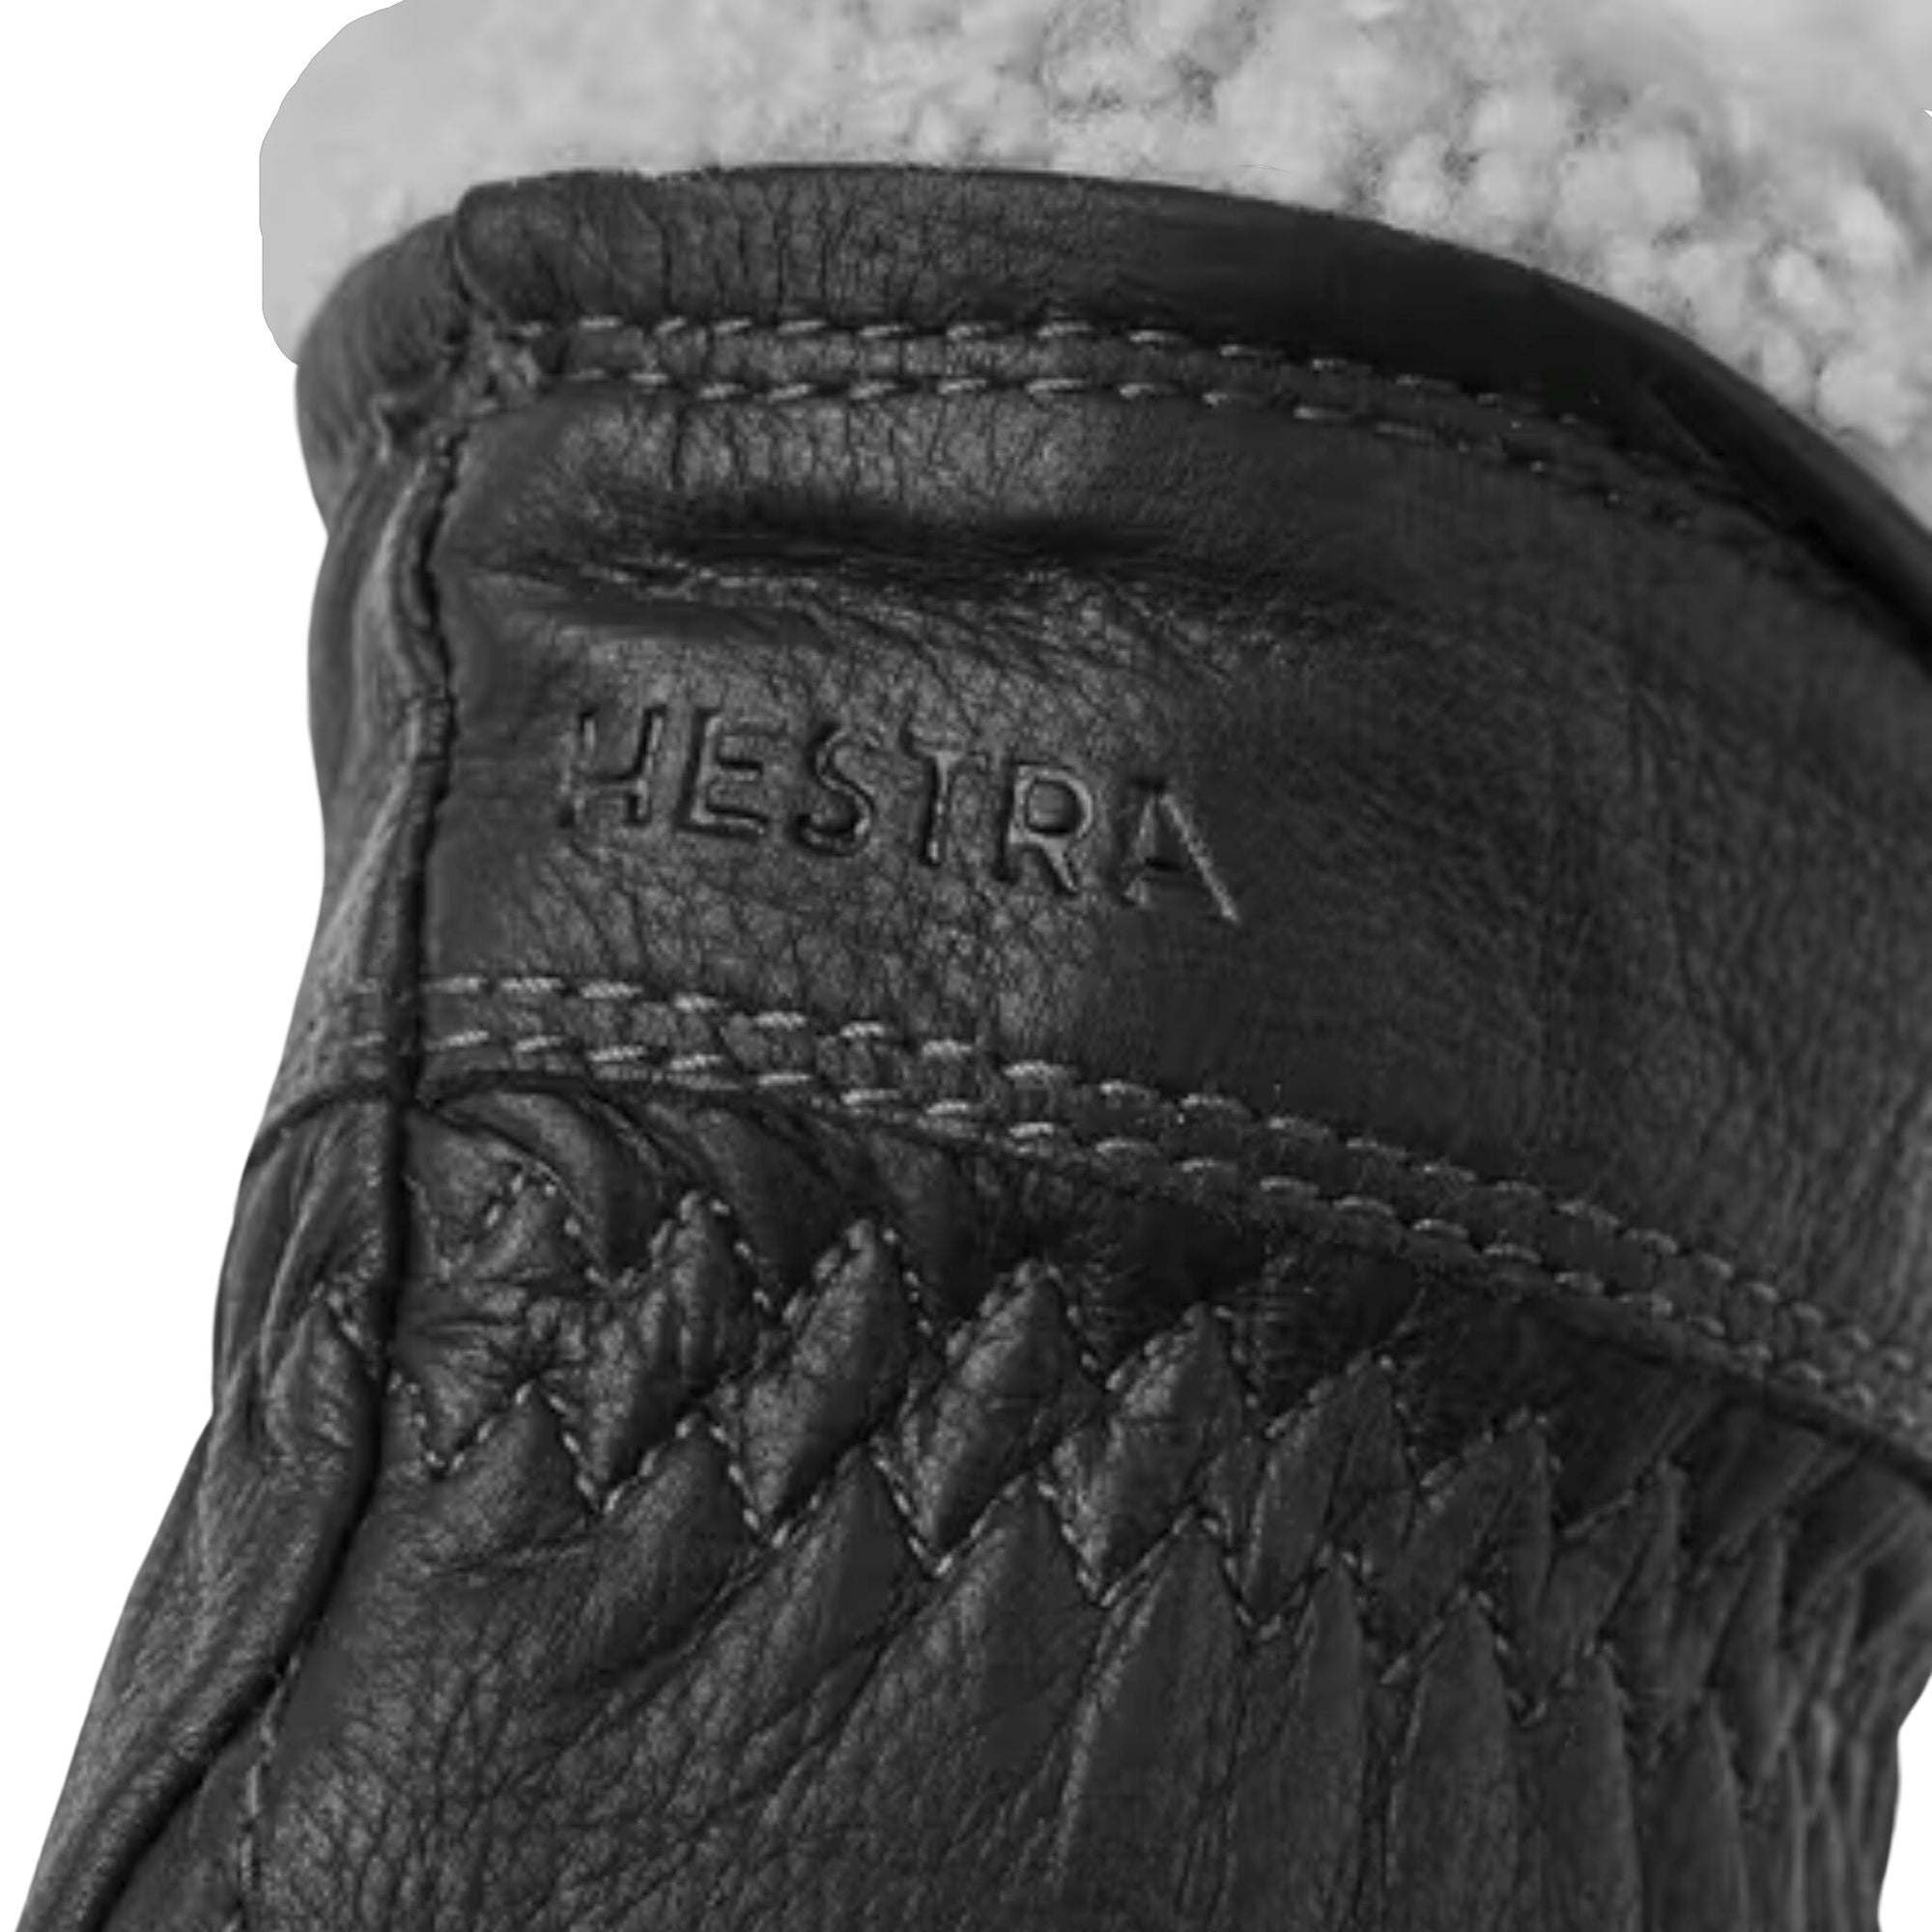 Womens Hestra Deerskin Primaloft Après Glove - Black Apre Gloves Hestra 6 (S) 